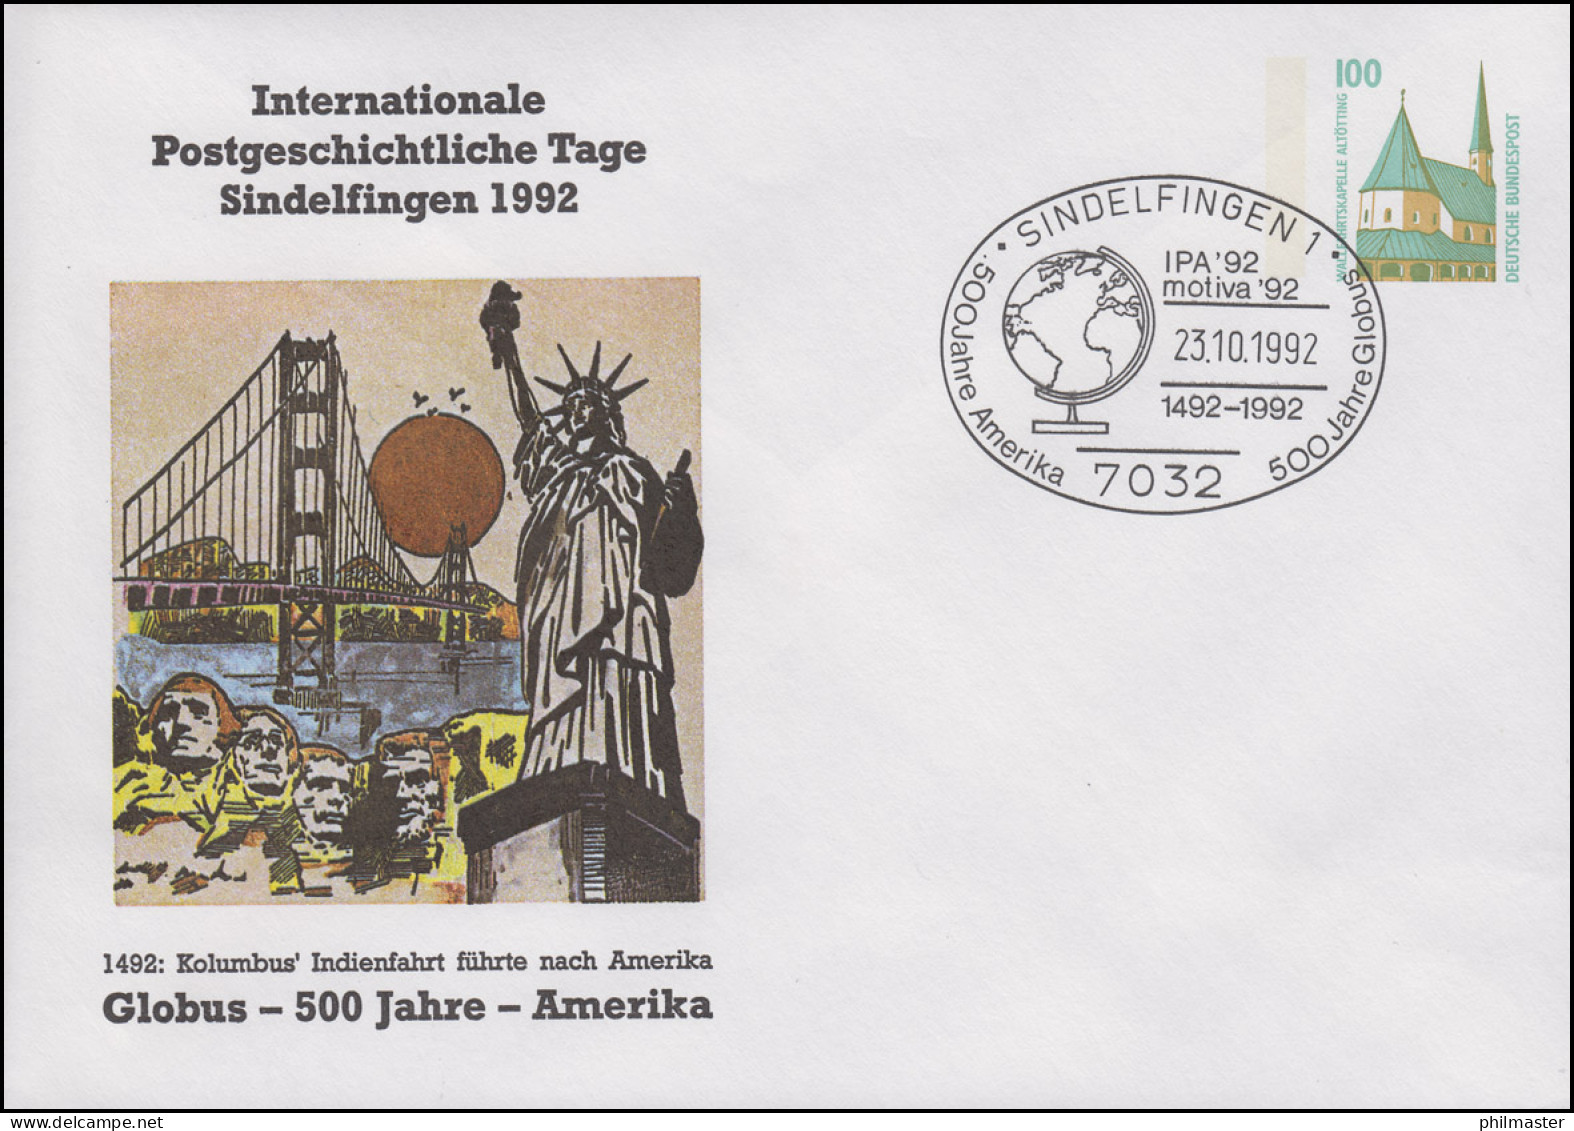 PU 290 Postgeschichtliche Tage Sindelfingen, SSt Sifi Globus Amerika 23.10.1992 - Private Covers - Mint